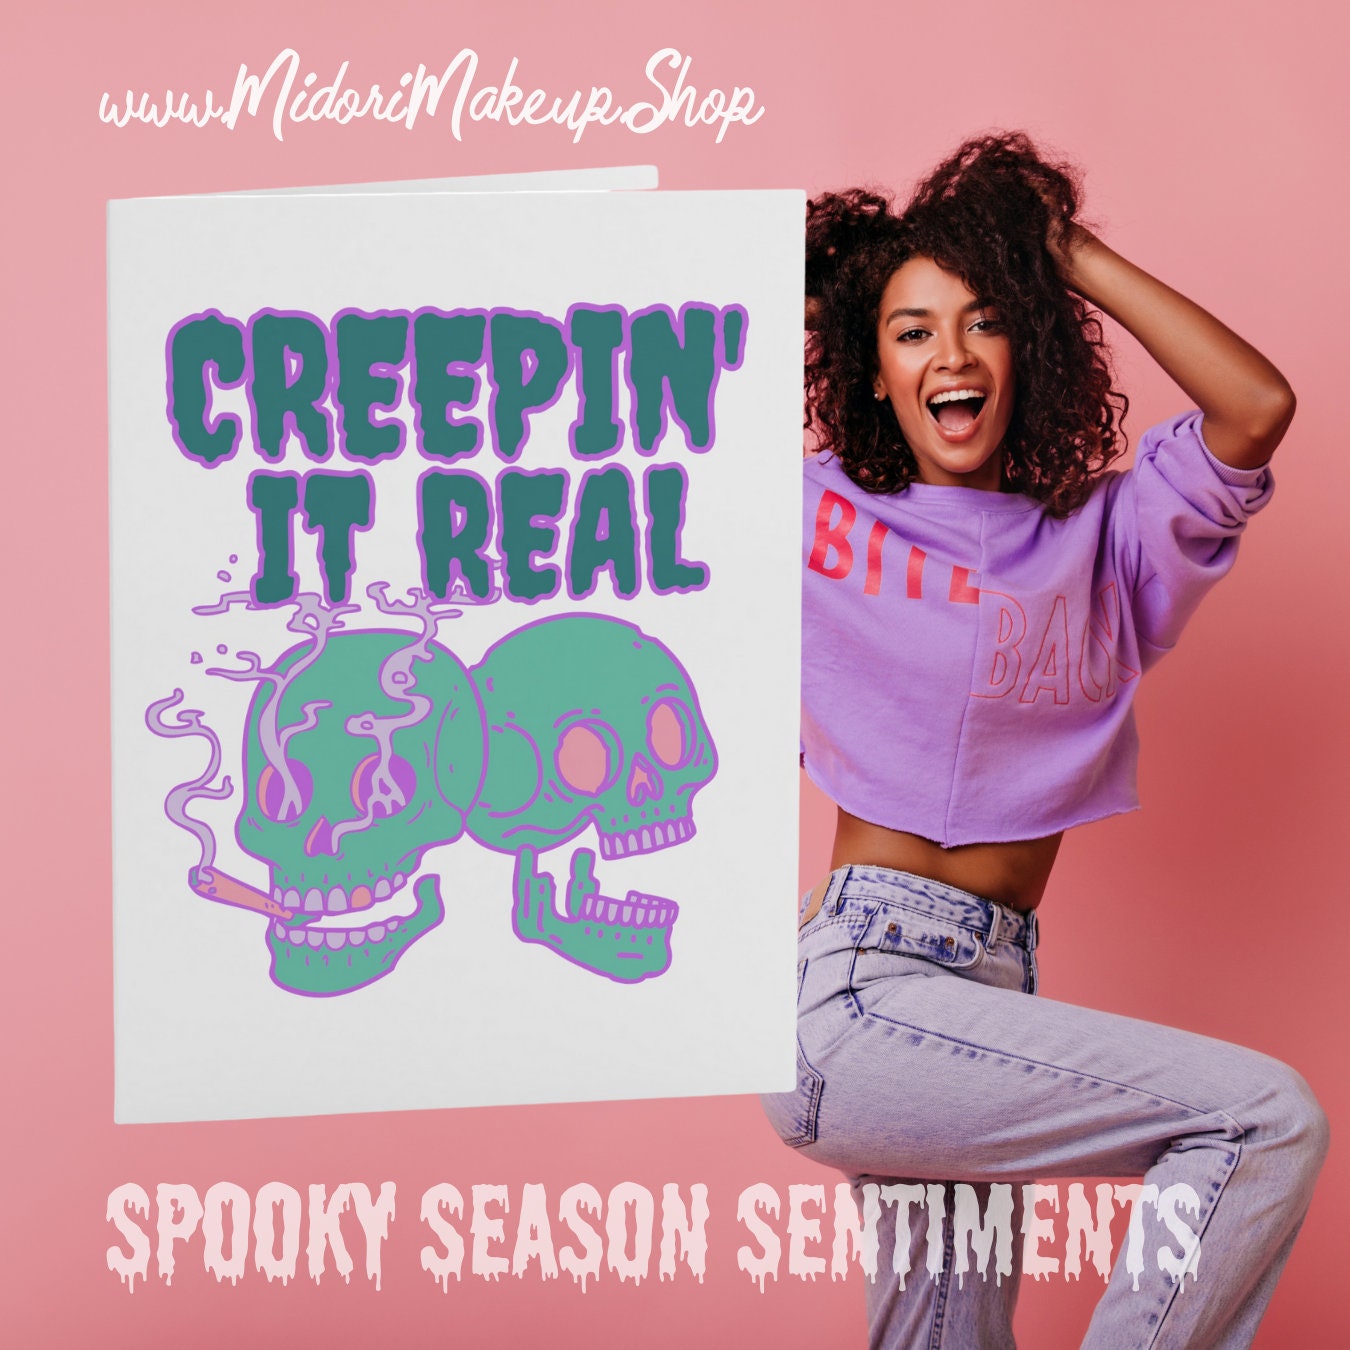 Halloween Skull Creepy Couple Smoker BFF Funny Gift Fall Season Spooky Skeleton Retro Creepin it Real Trick Treat Happy Halloween Cards 1-10